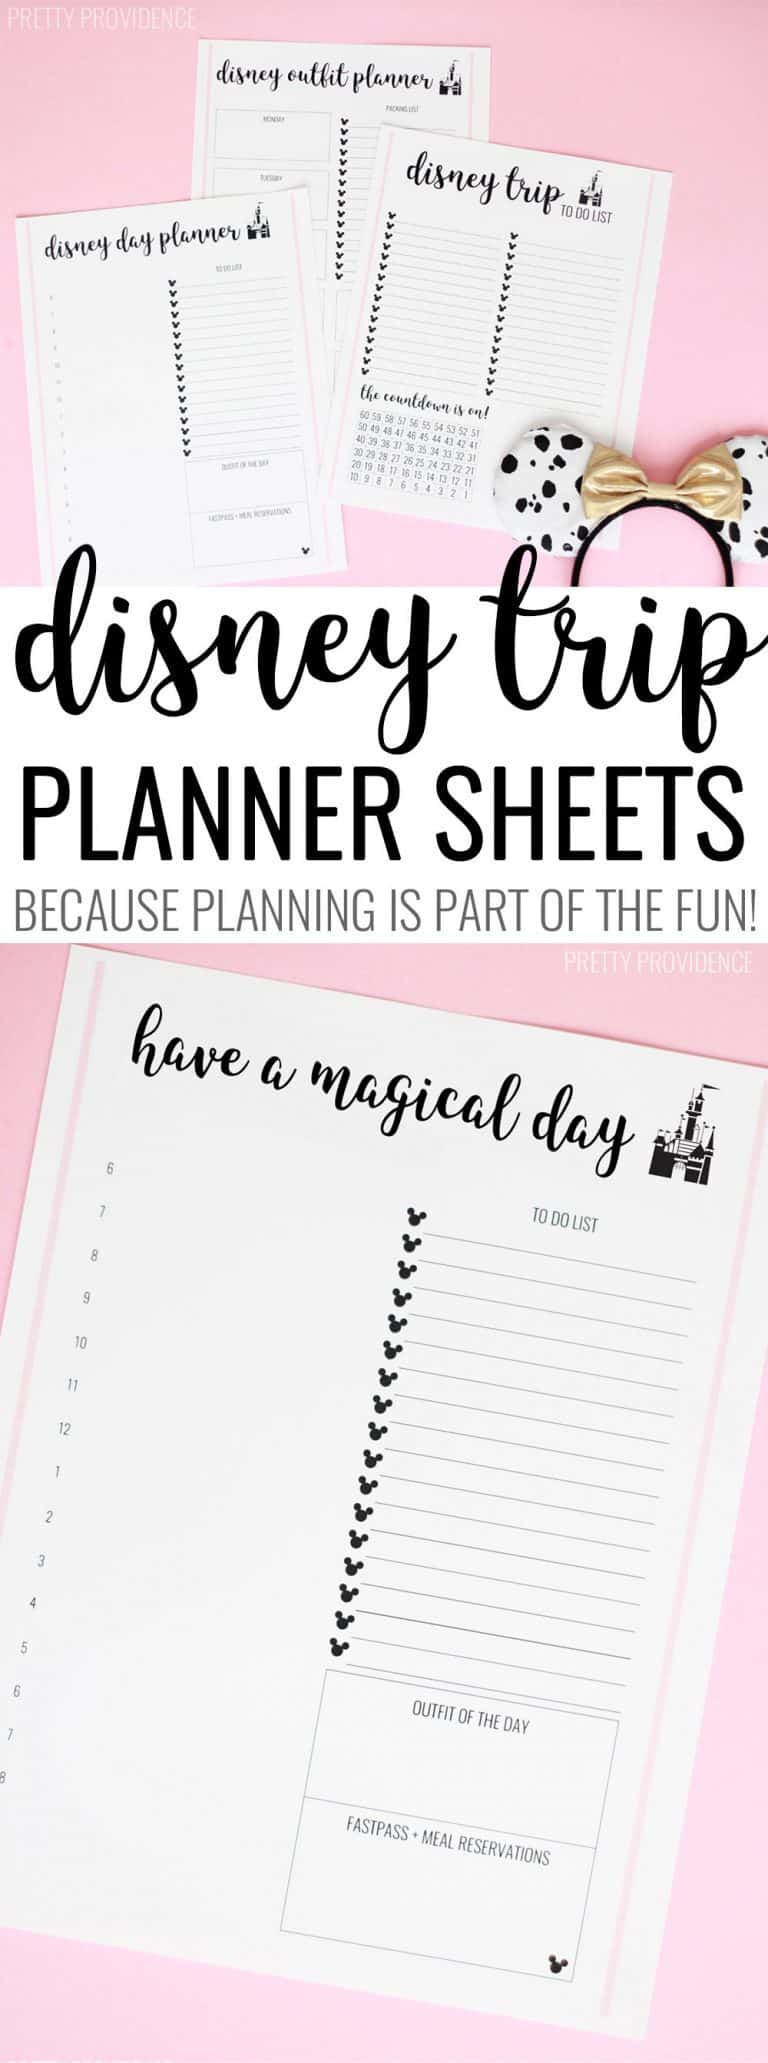 Disney Trip Planner Sheets - Pretty Providence